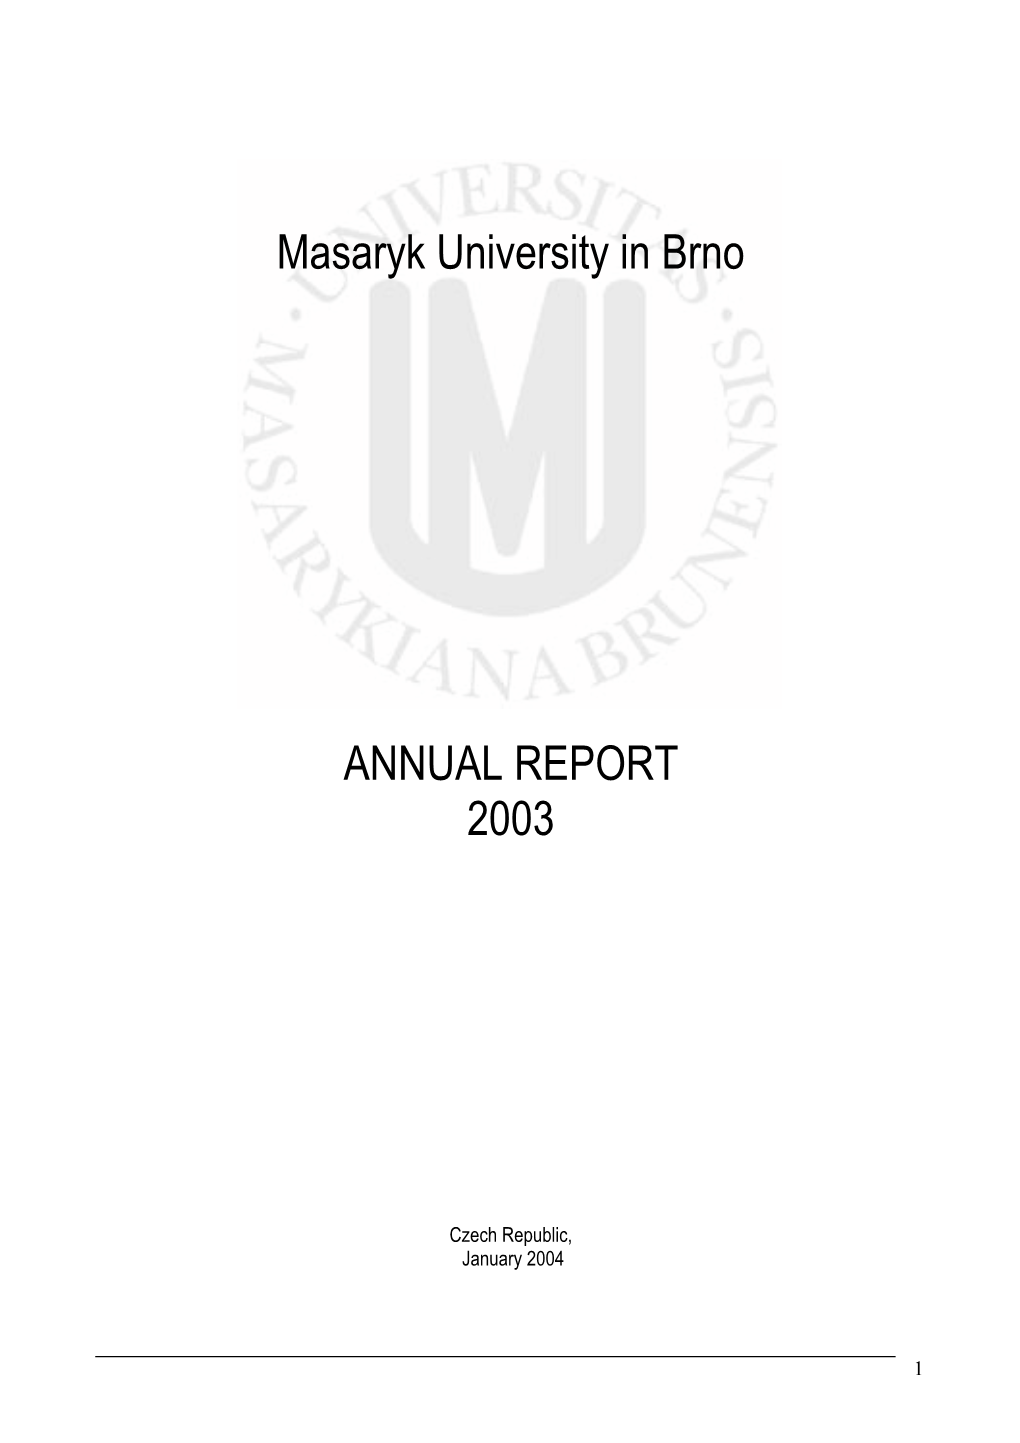 Masaryk University in Brno ANNUAL REPORT 2003